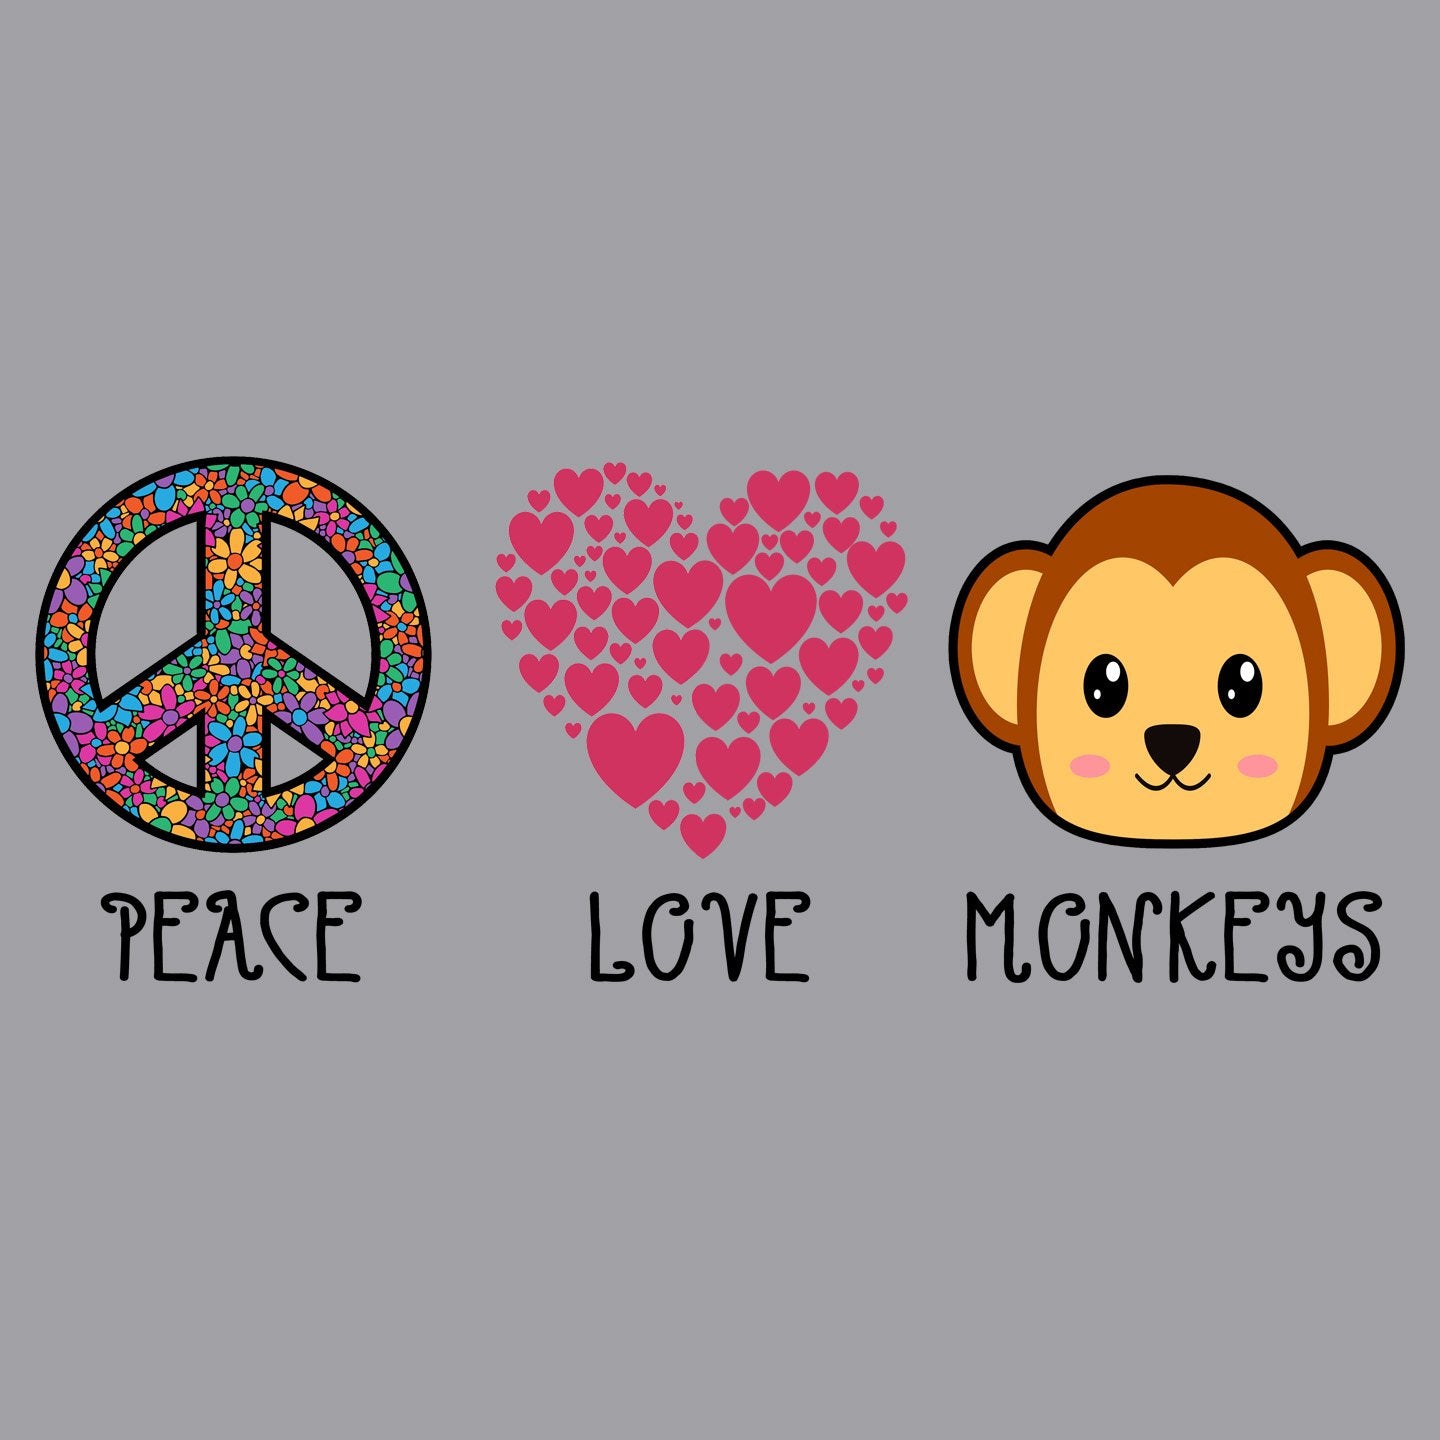 MeUndies : Peace, Love, & Sloth 🦥